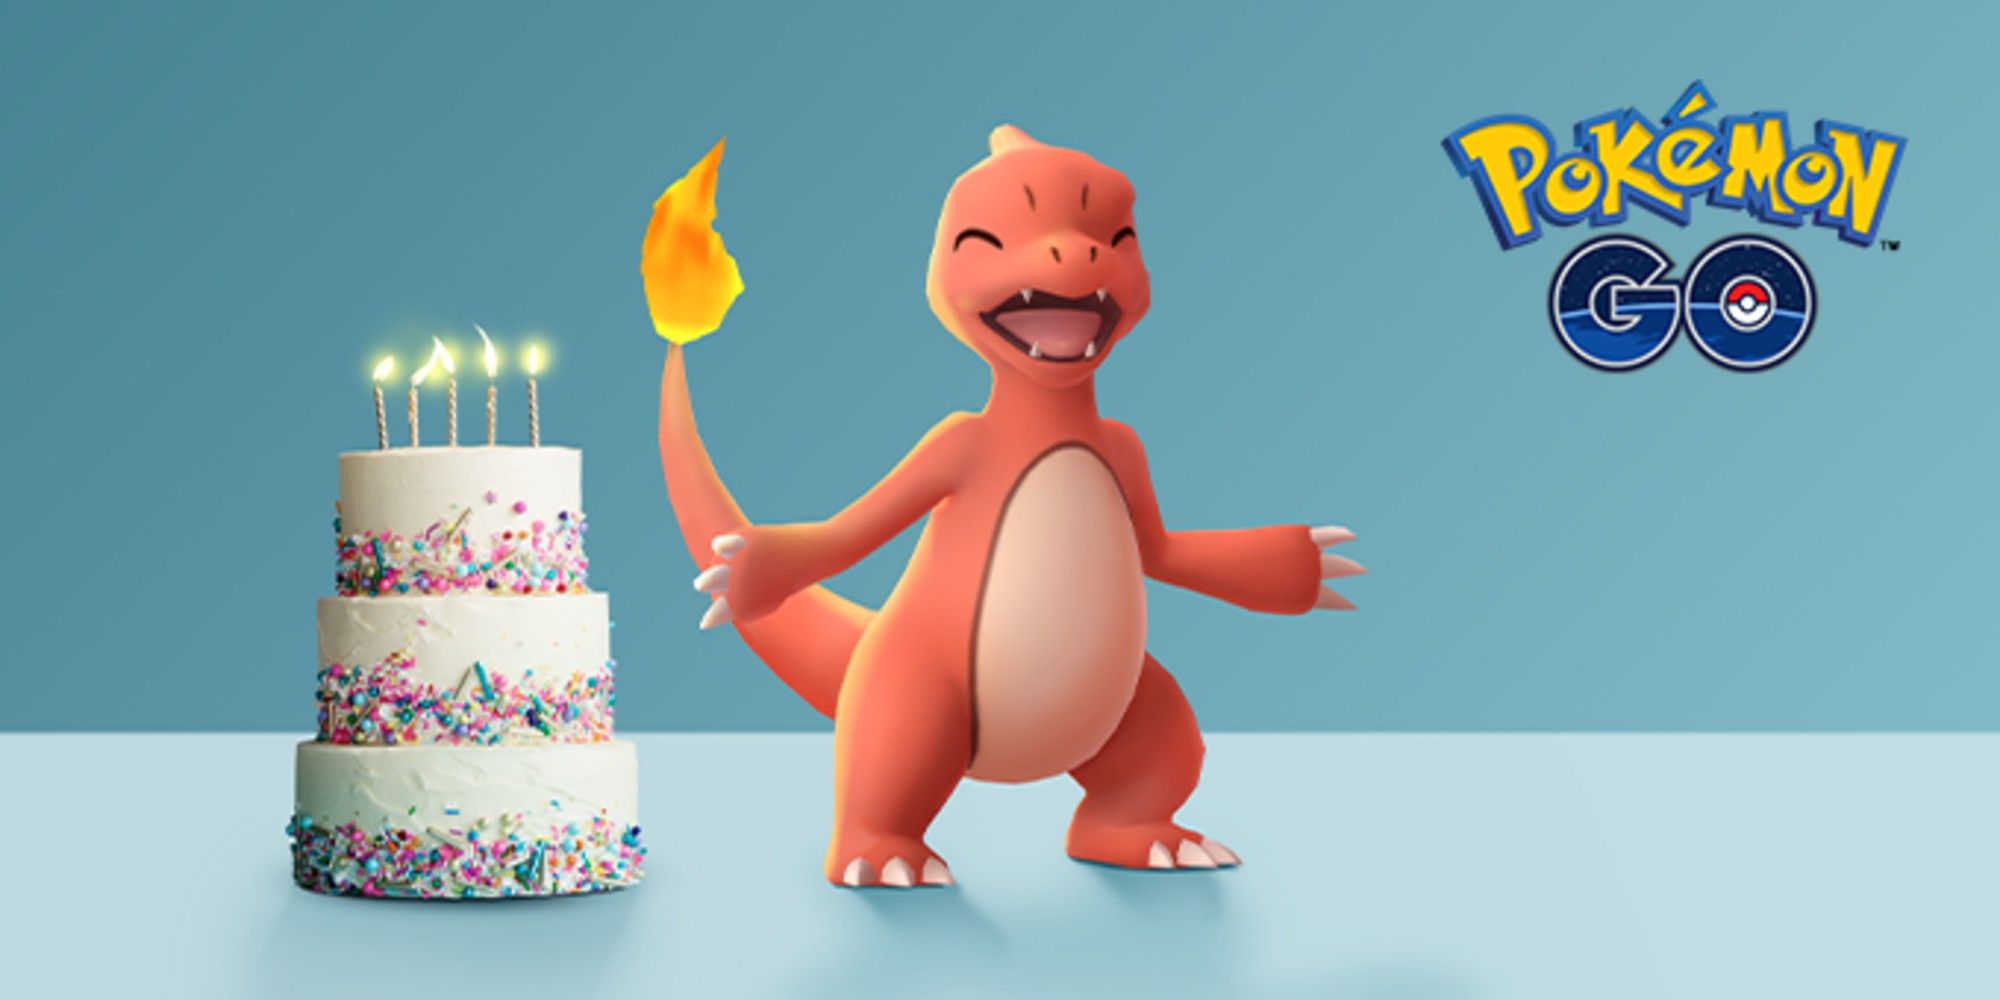 Pokemon Go Celebrates 5th Anniversary With Flying Pikachu And Shiny Darumaka